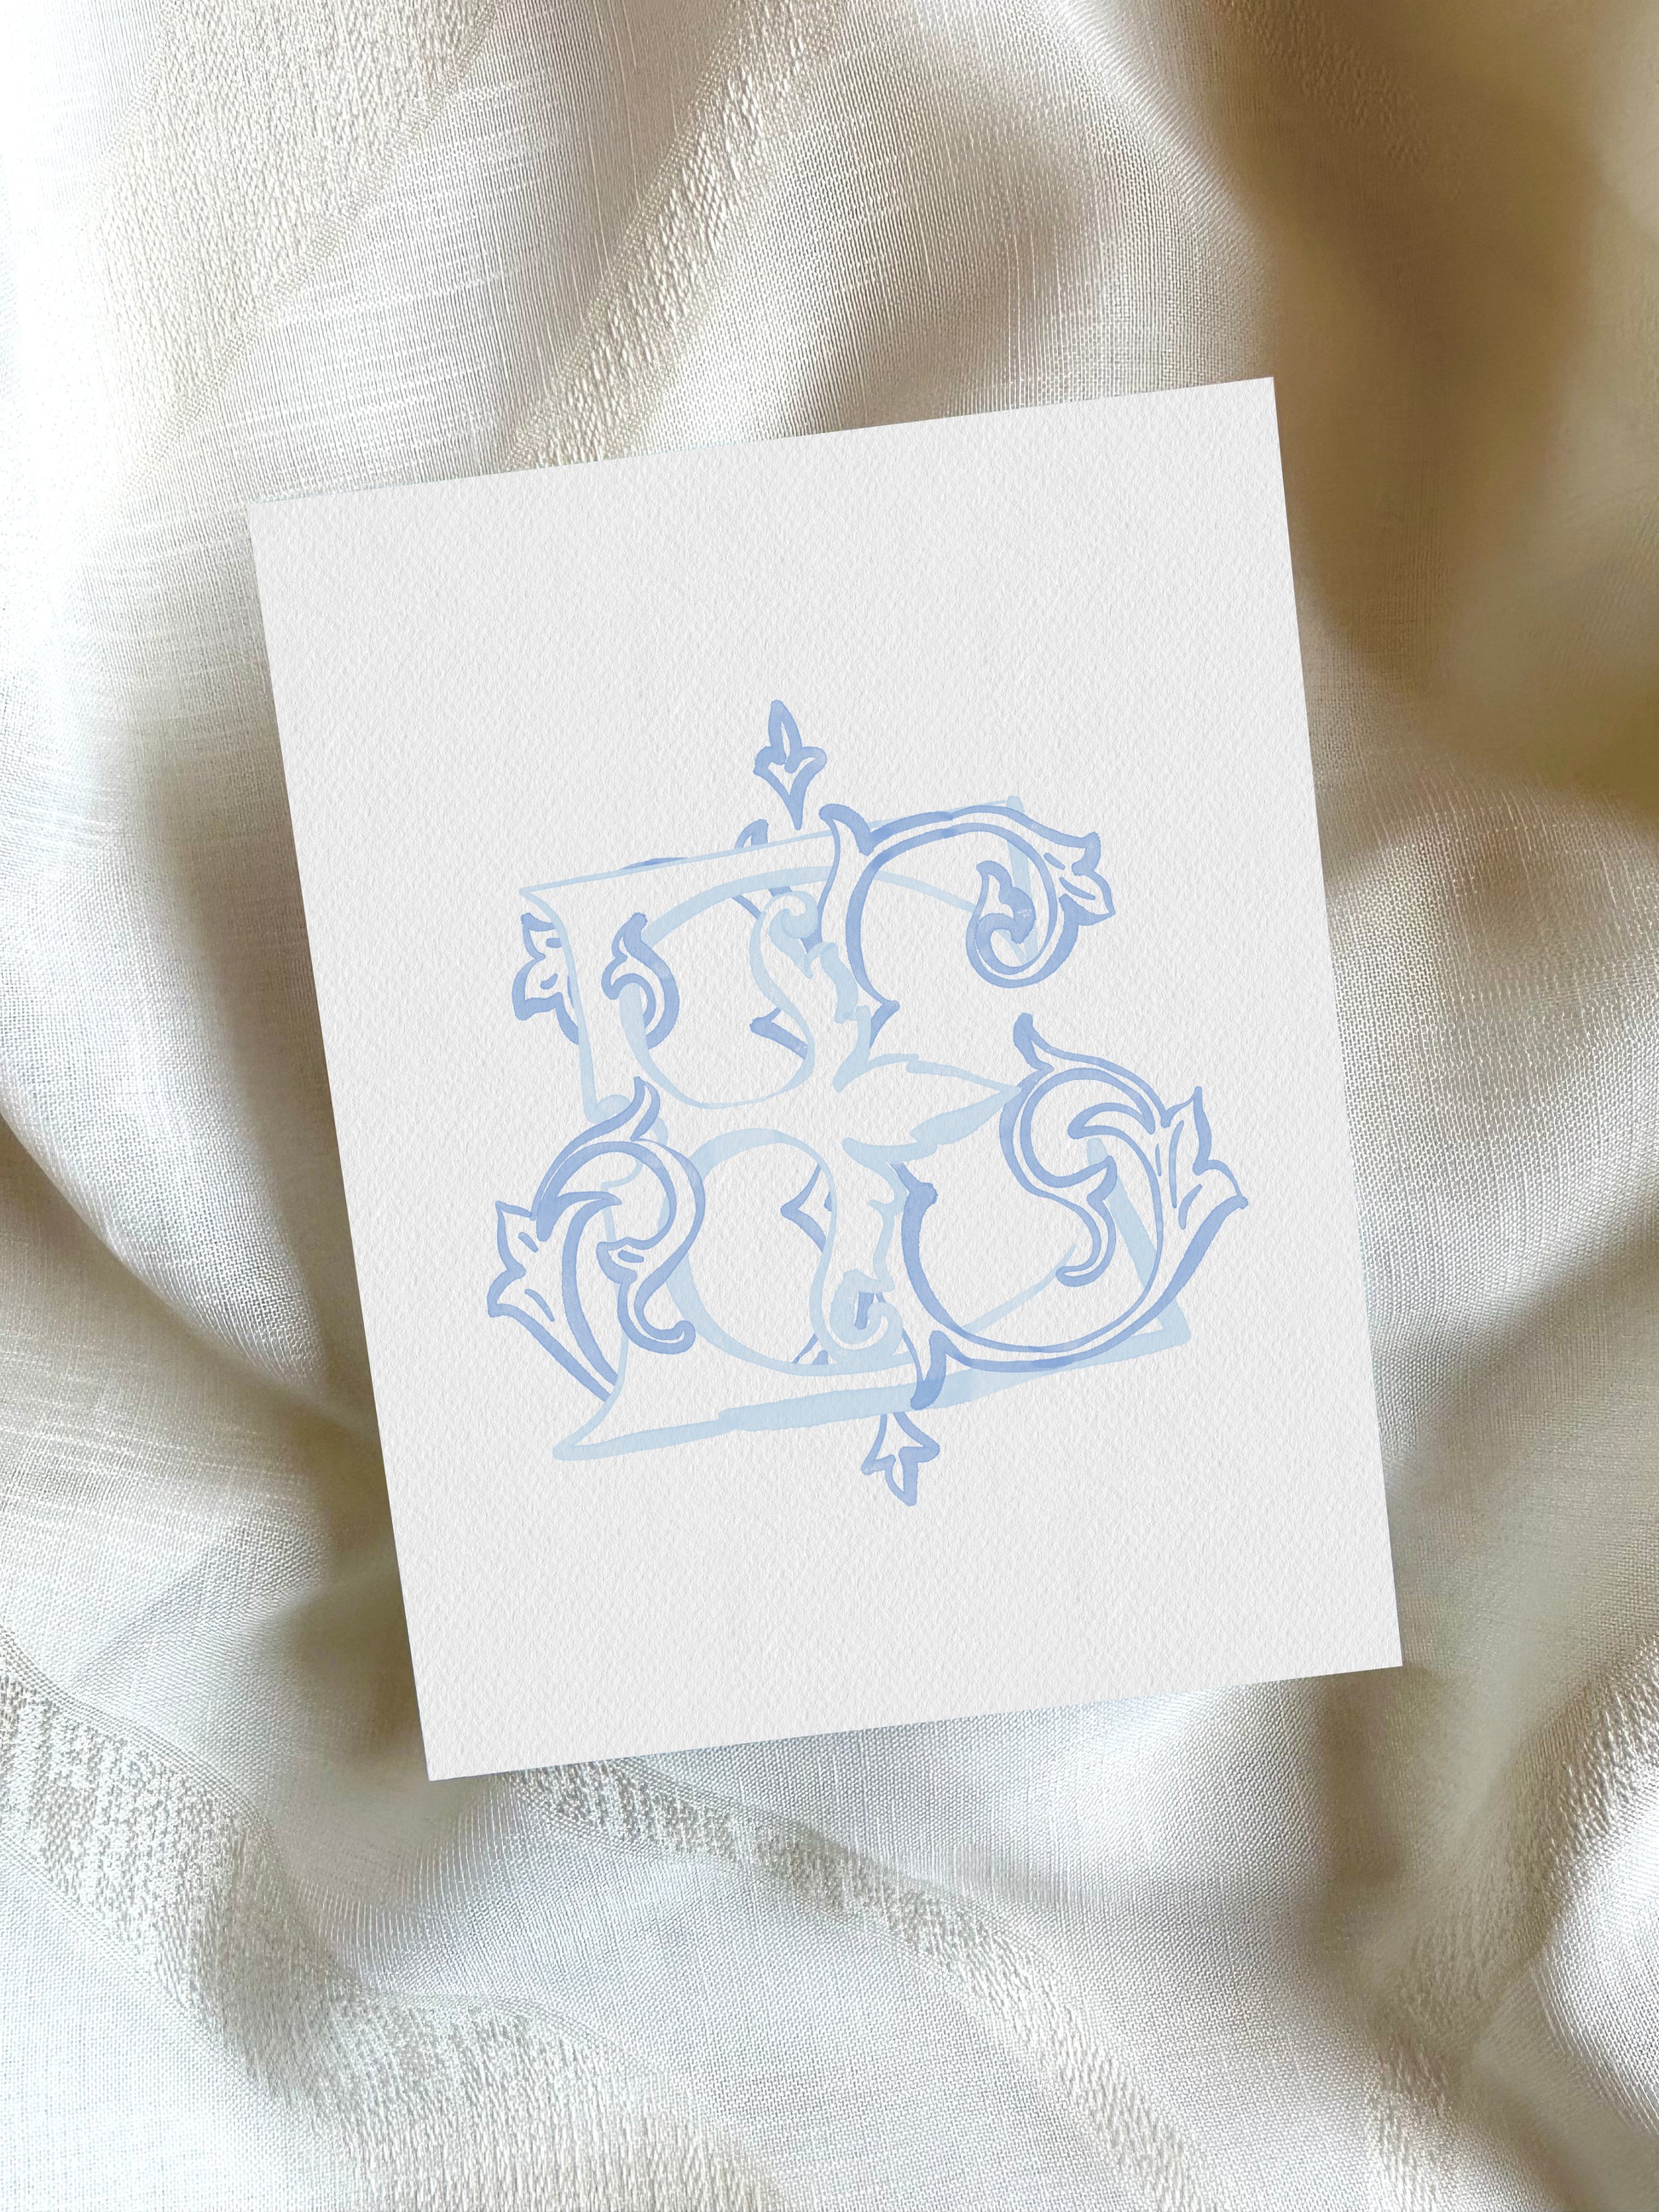 2 Letter Monogram with Letters EX XE | Digital Download - Wedding Monogram SVG, Personal Logo, Wedding Logo for Wedding Invitations The Wedding Crest Lab